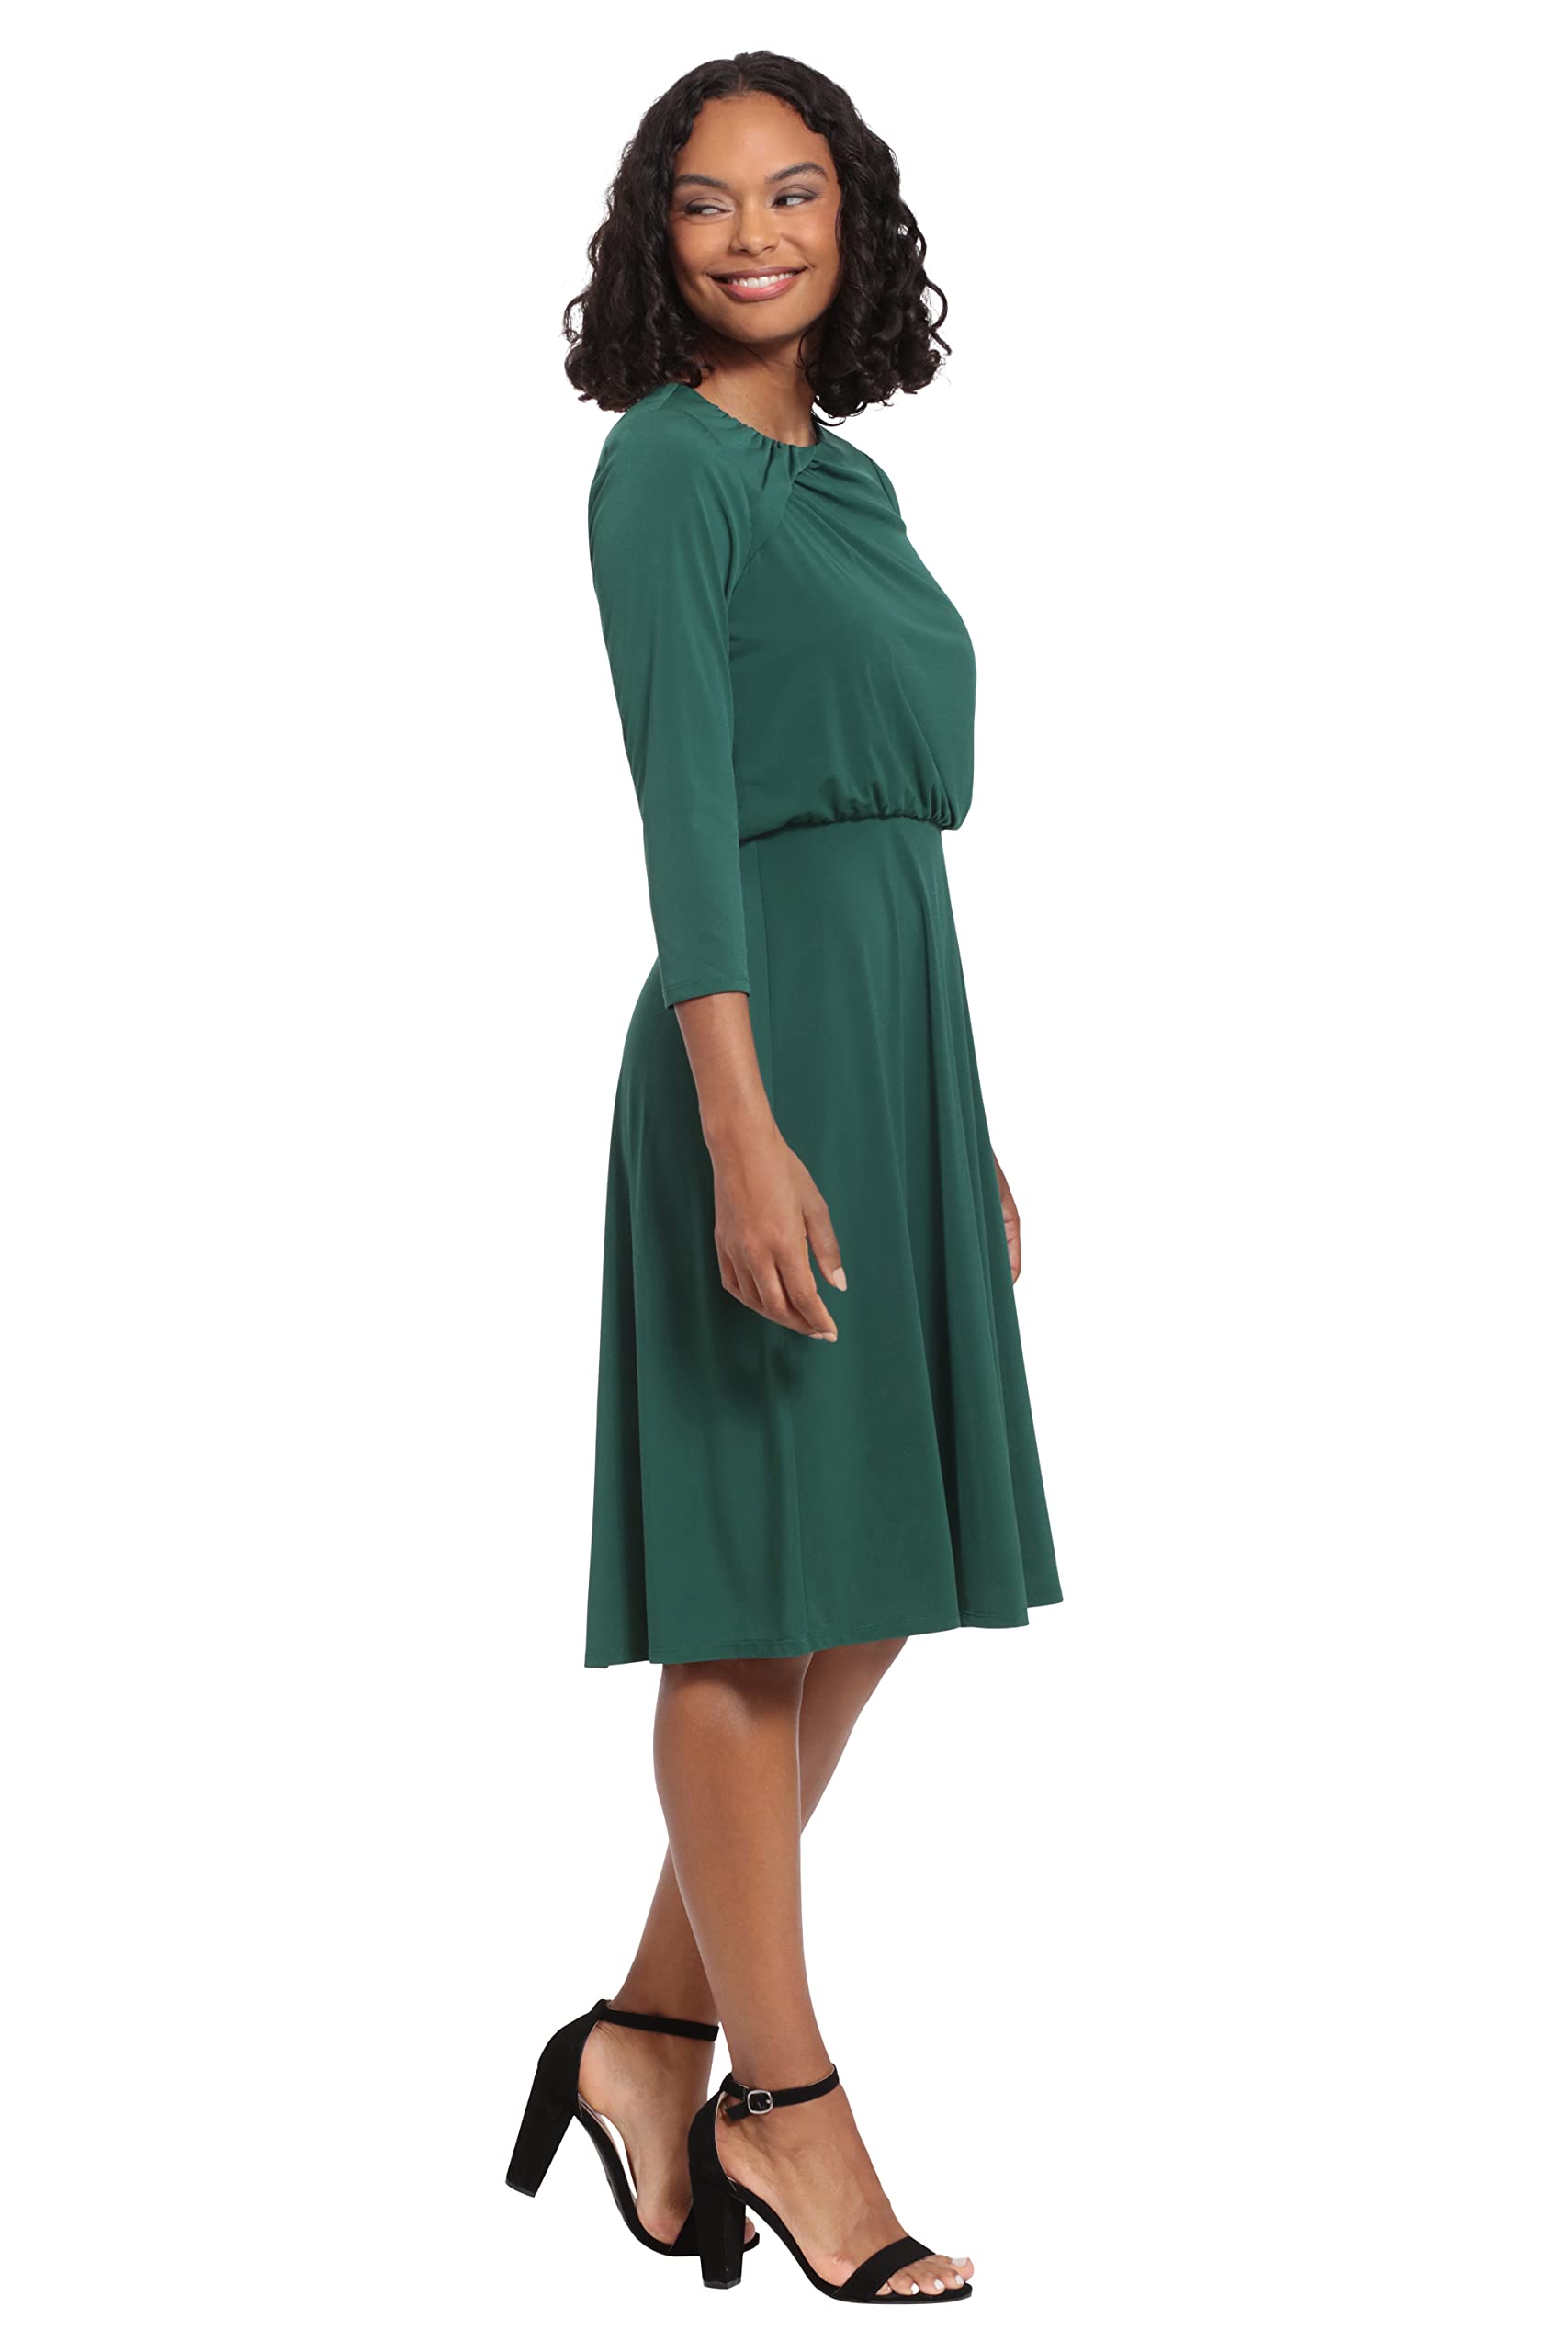 London Times Women's Versatile Jewel Draped Neck Blouson 3/4 Sleeve Jersey Dress